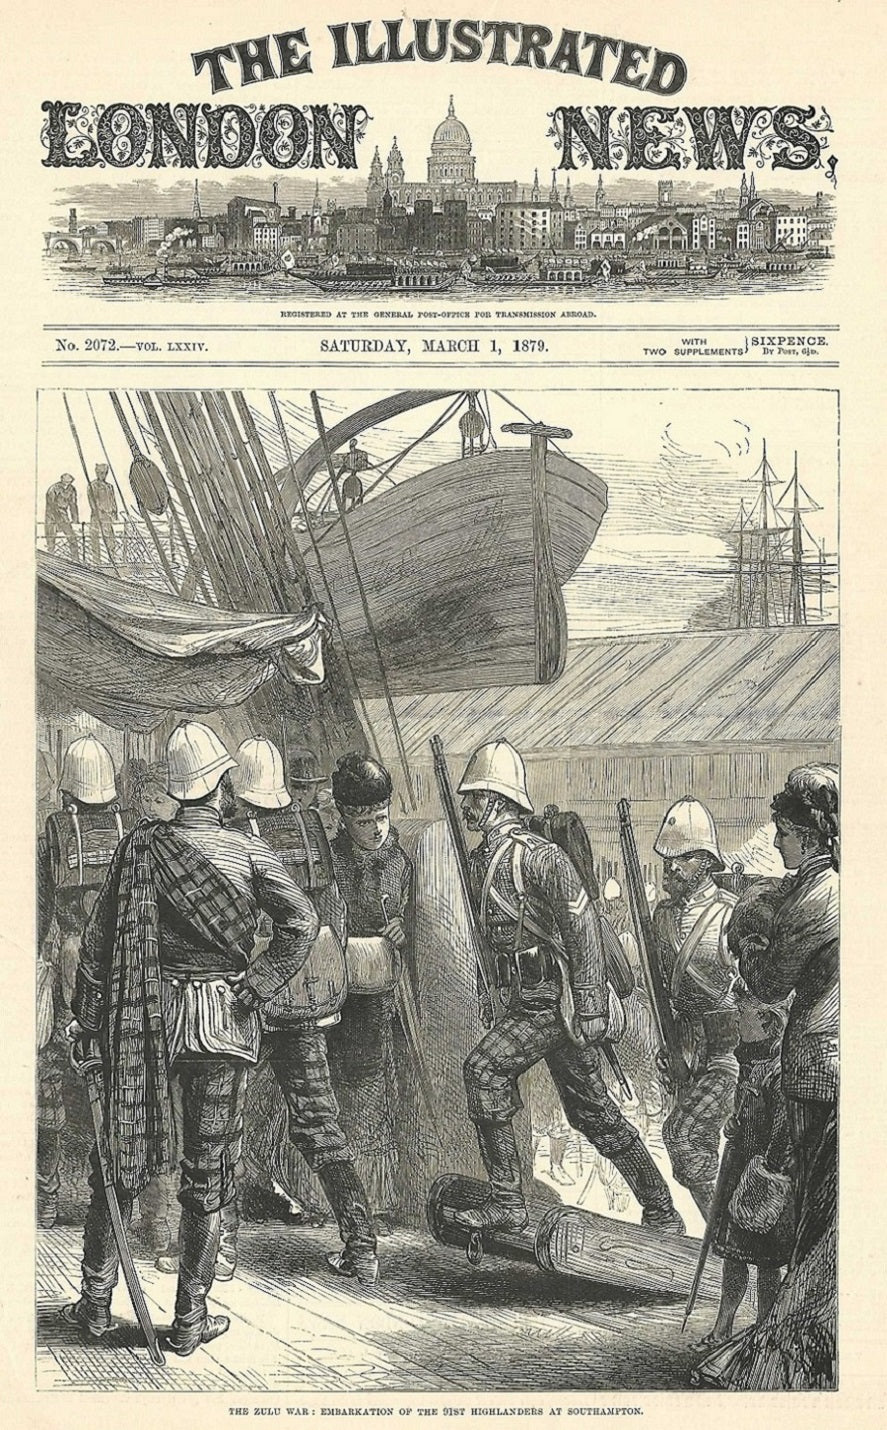 Zulu War embarkation of 91st Highlanders antique print 1879